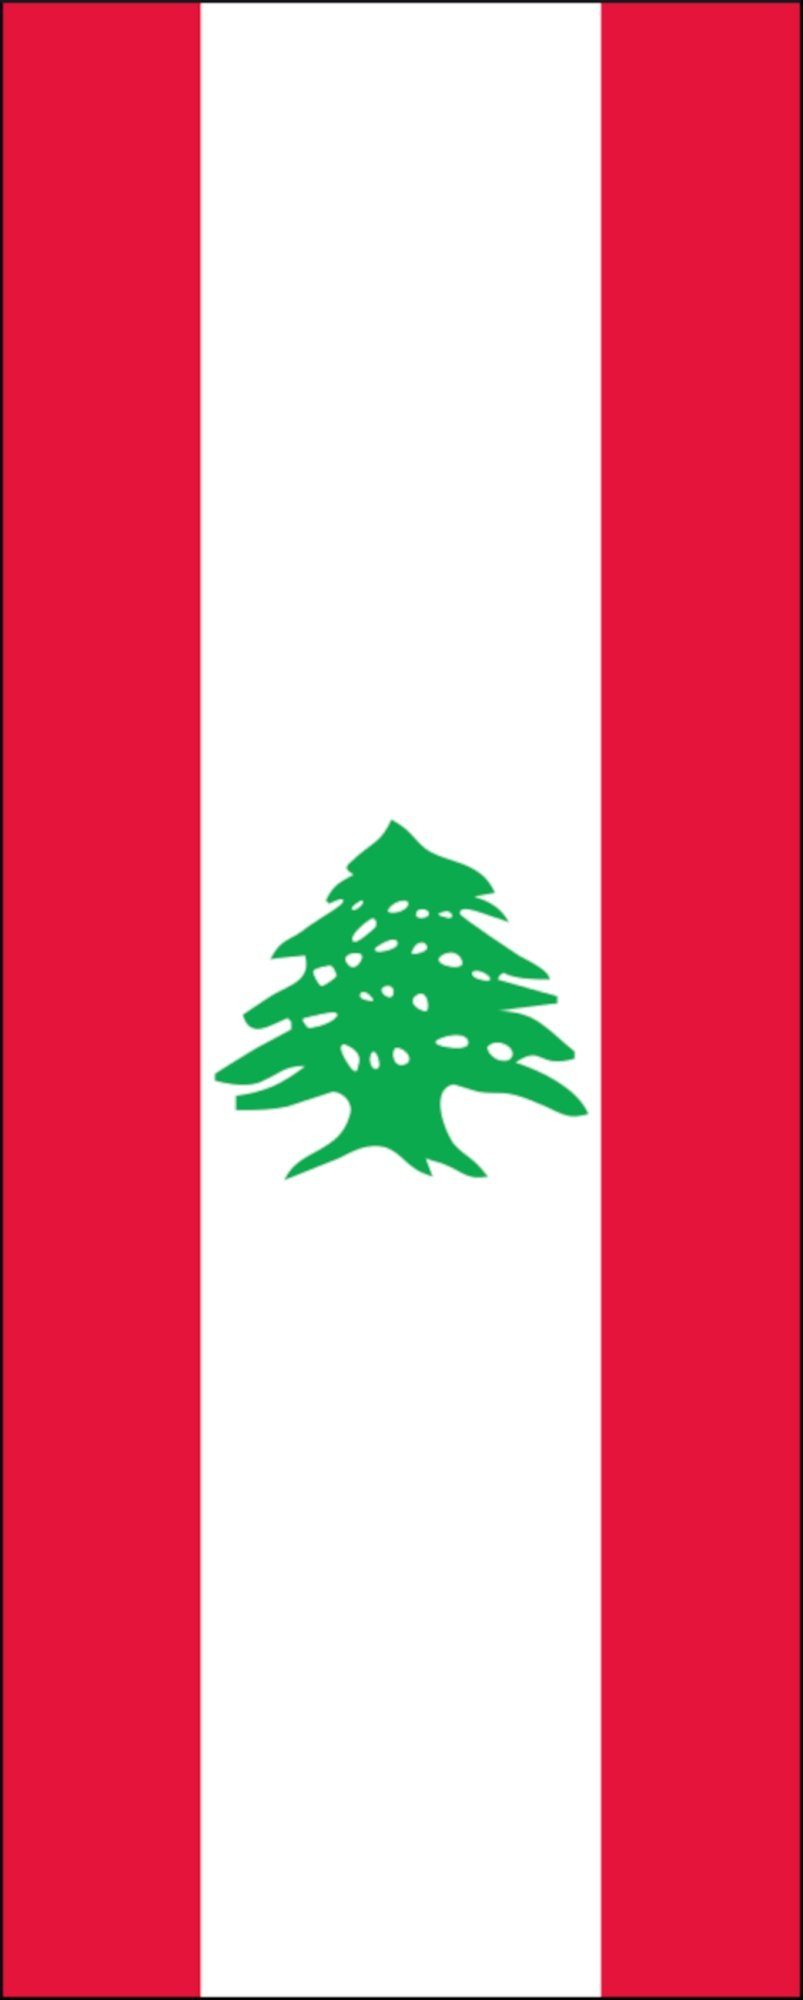 g/m² 110 Flagge Libanon Hochformat flaggenmeer Flagge